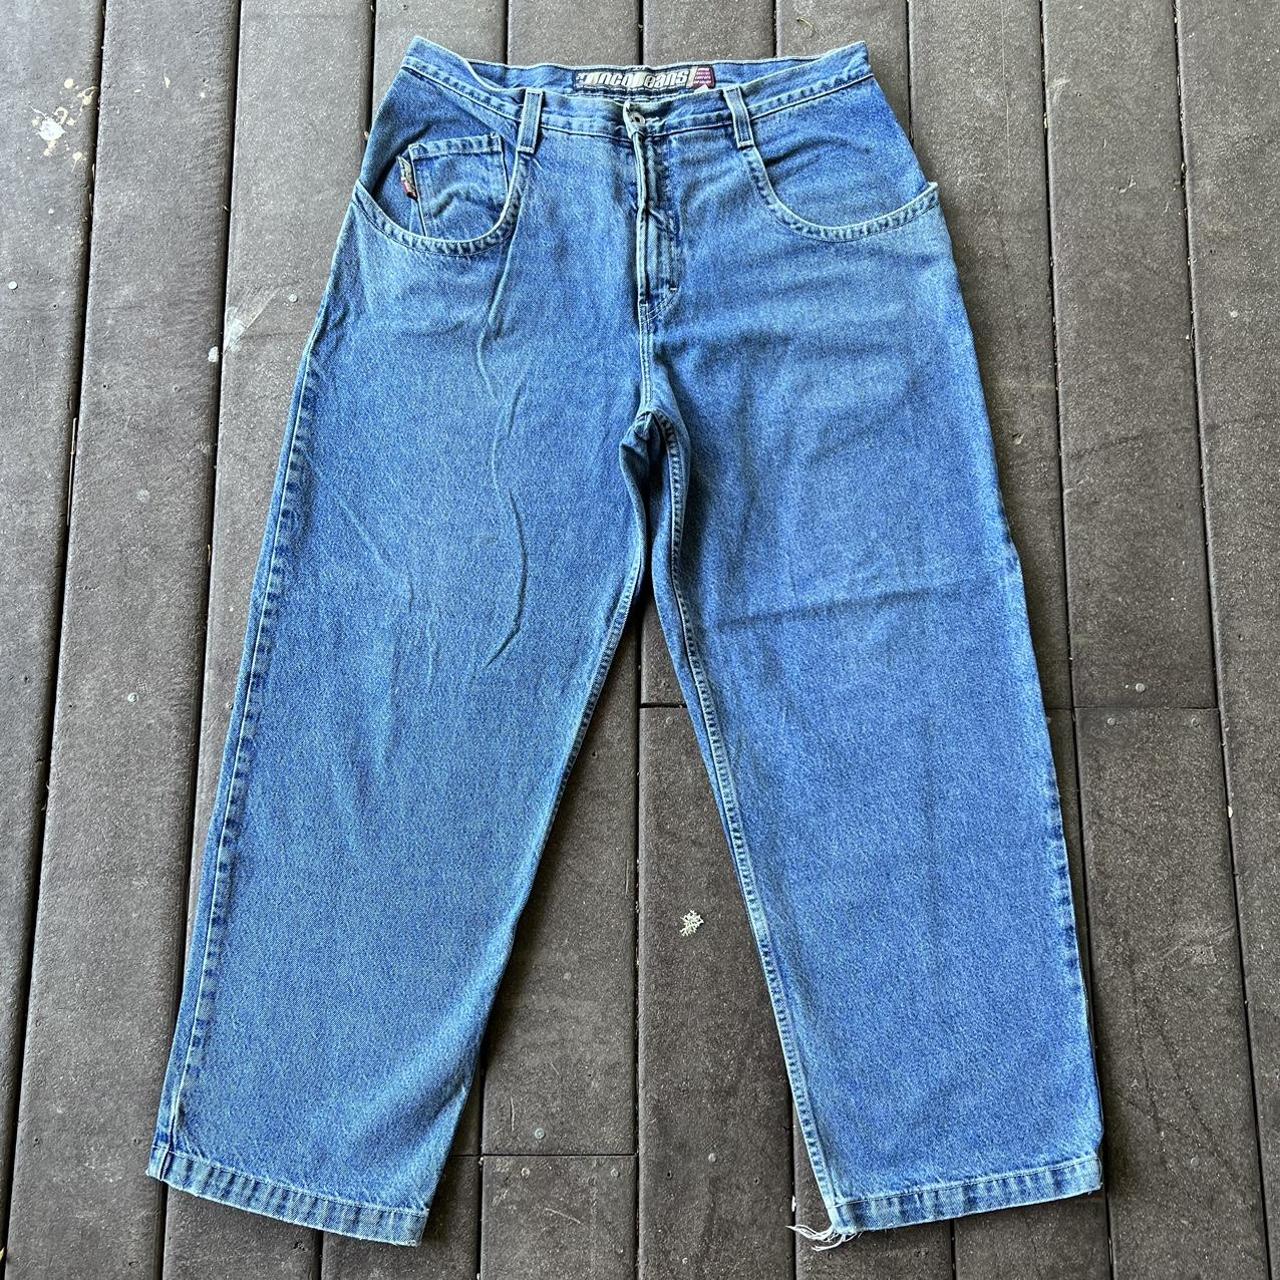 JNCO Men's multi Jeans | Depop